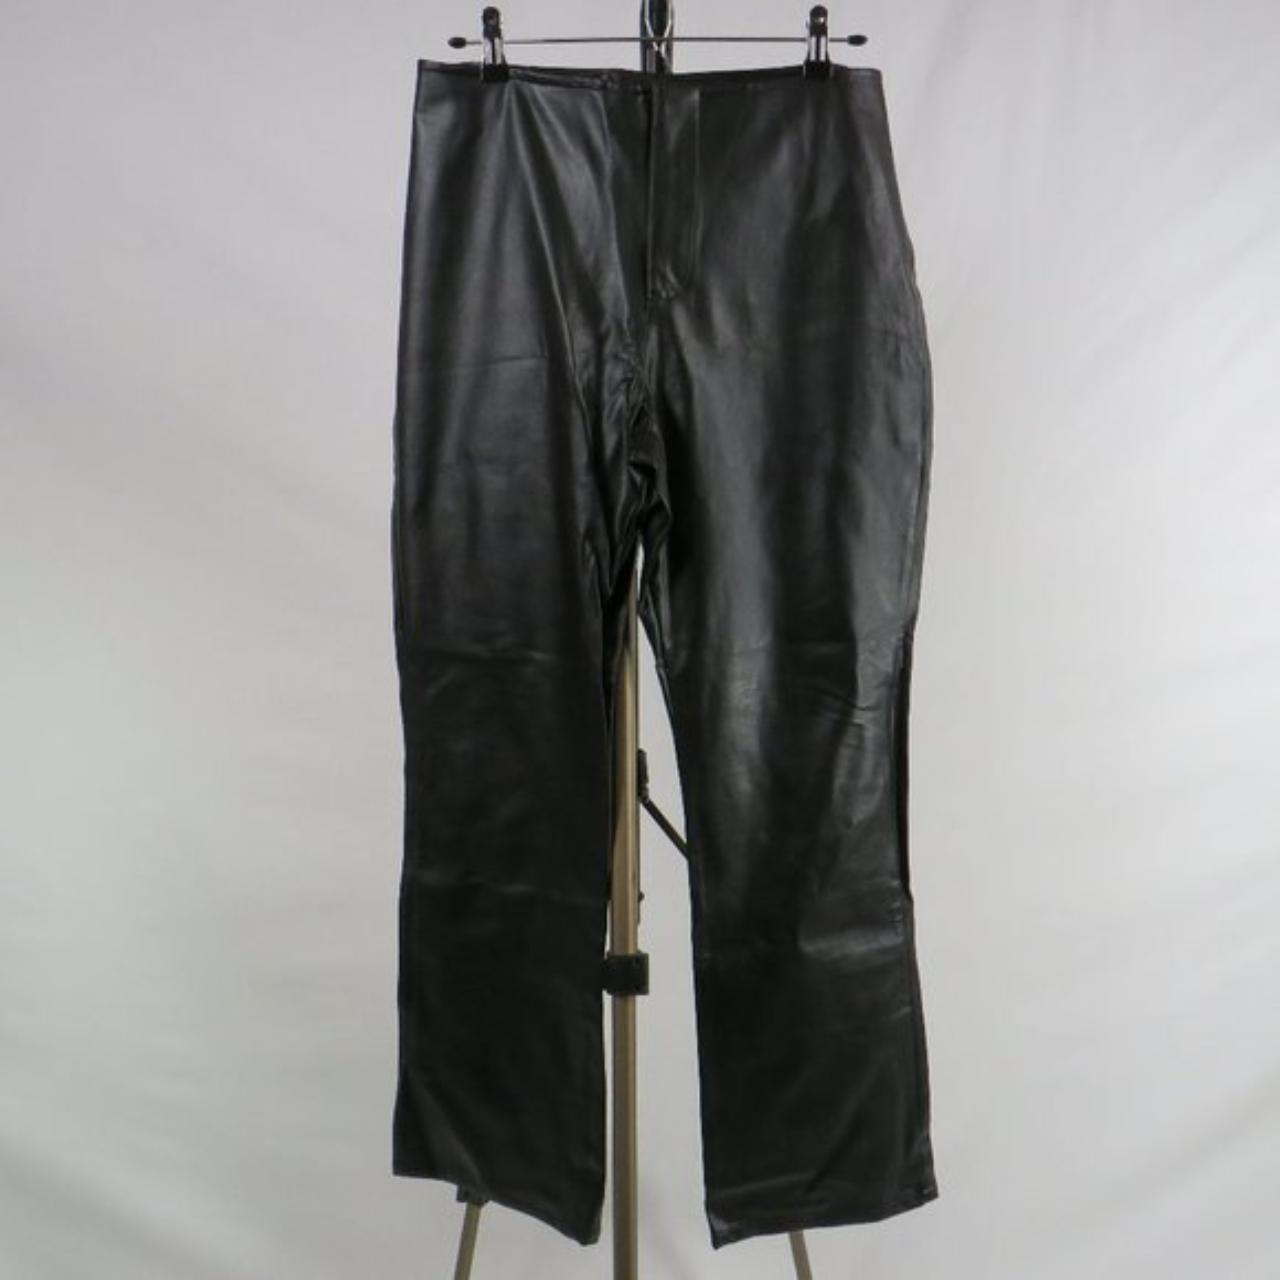 Mossimo black faux leather high-rise pants. Waist... - Depop